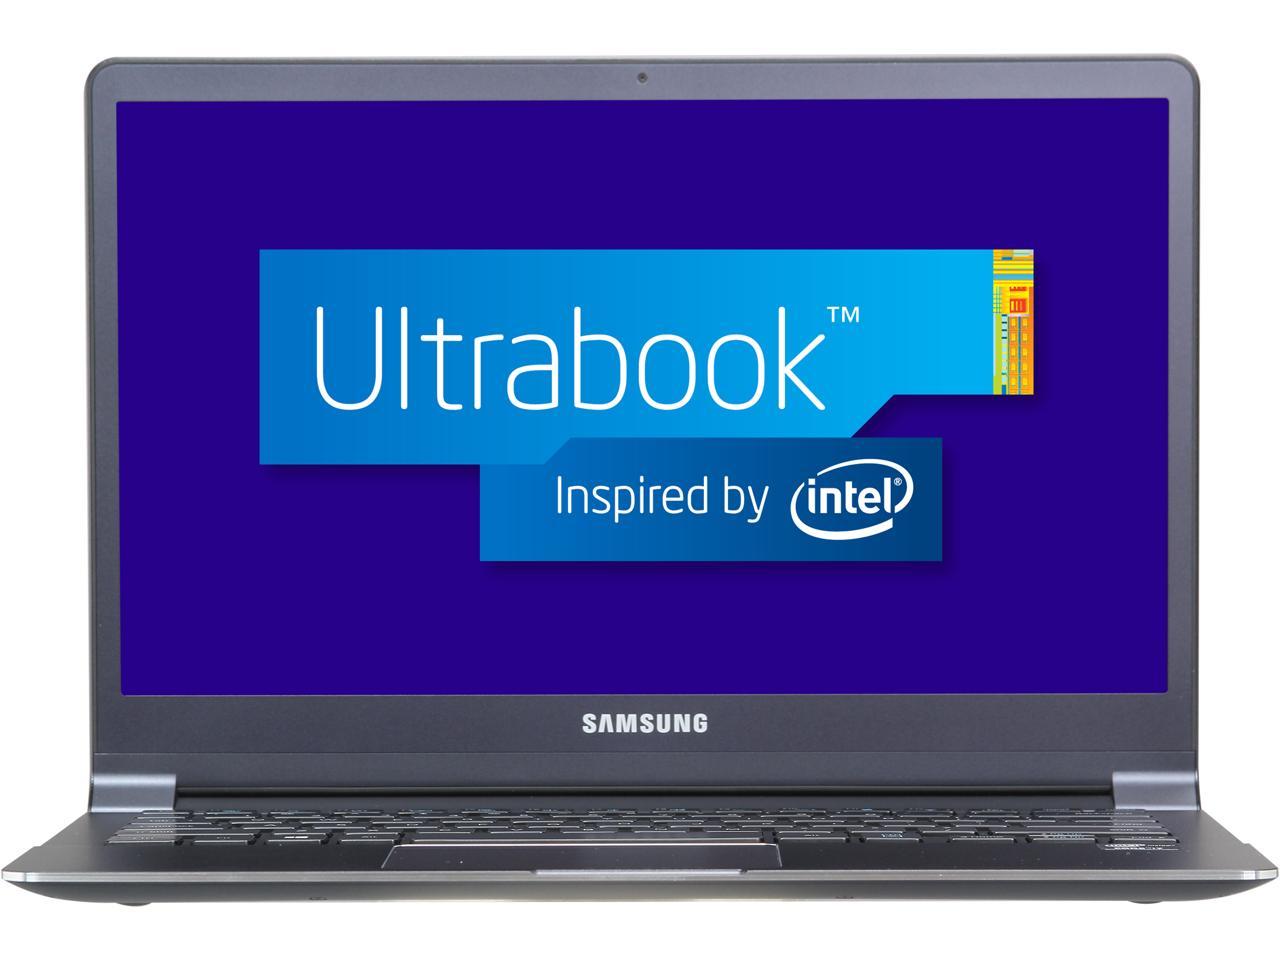 SAMSUNG Ultrabook Series 9 NP900X3E-A02US Intel Core i7 3rd Gen 3537U  (2.00GHz) 4GB Memory 128 GB SSD Intel HD Graphics 4000 13.3" Windows 8  64-bit - Newegg.com